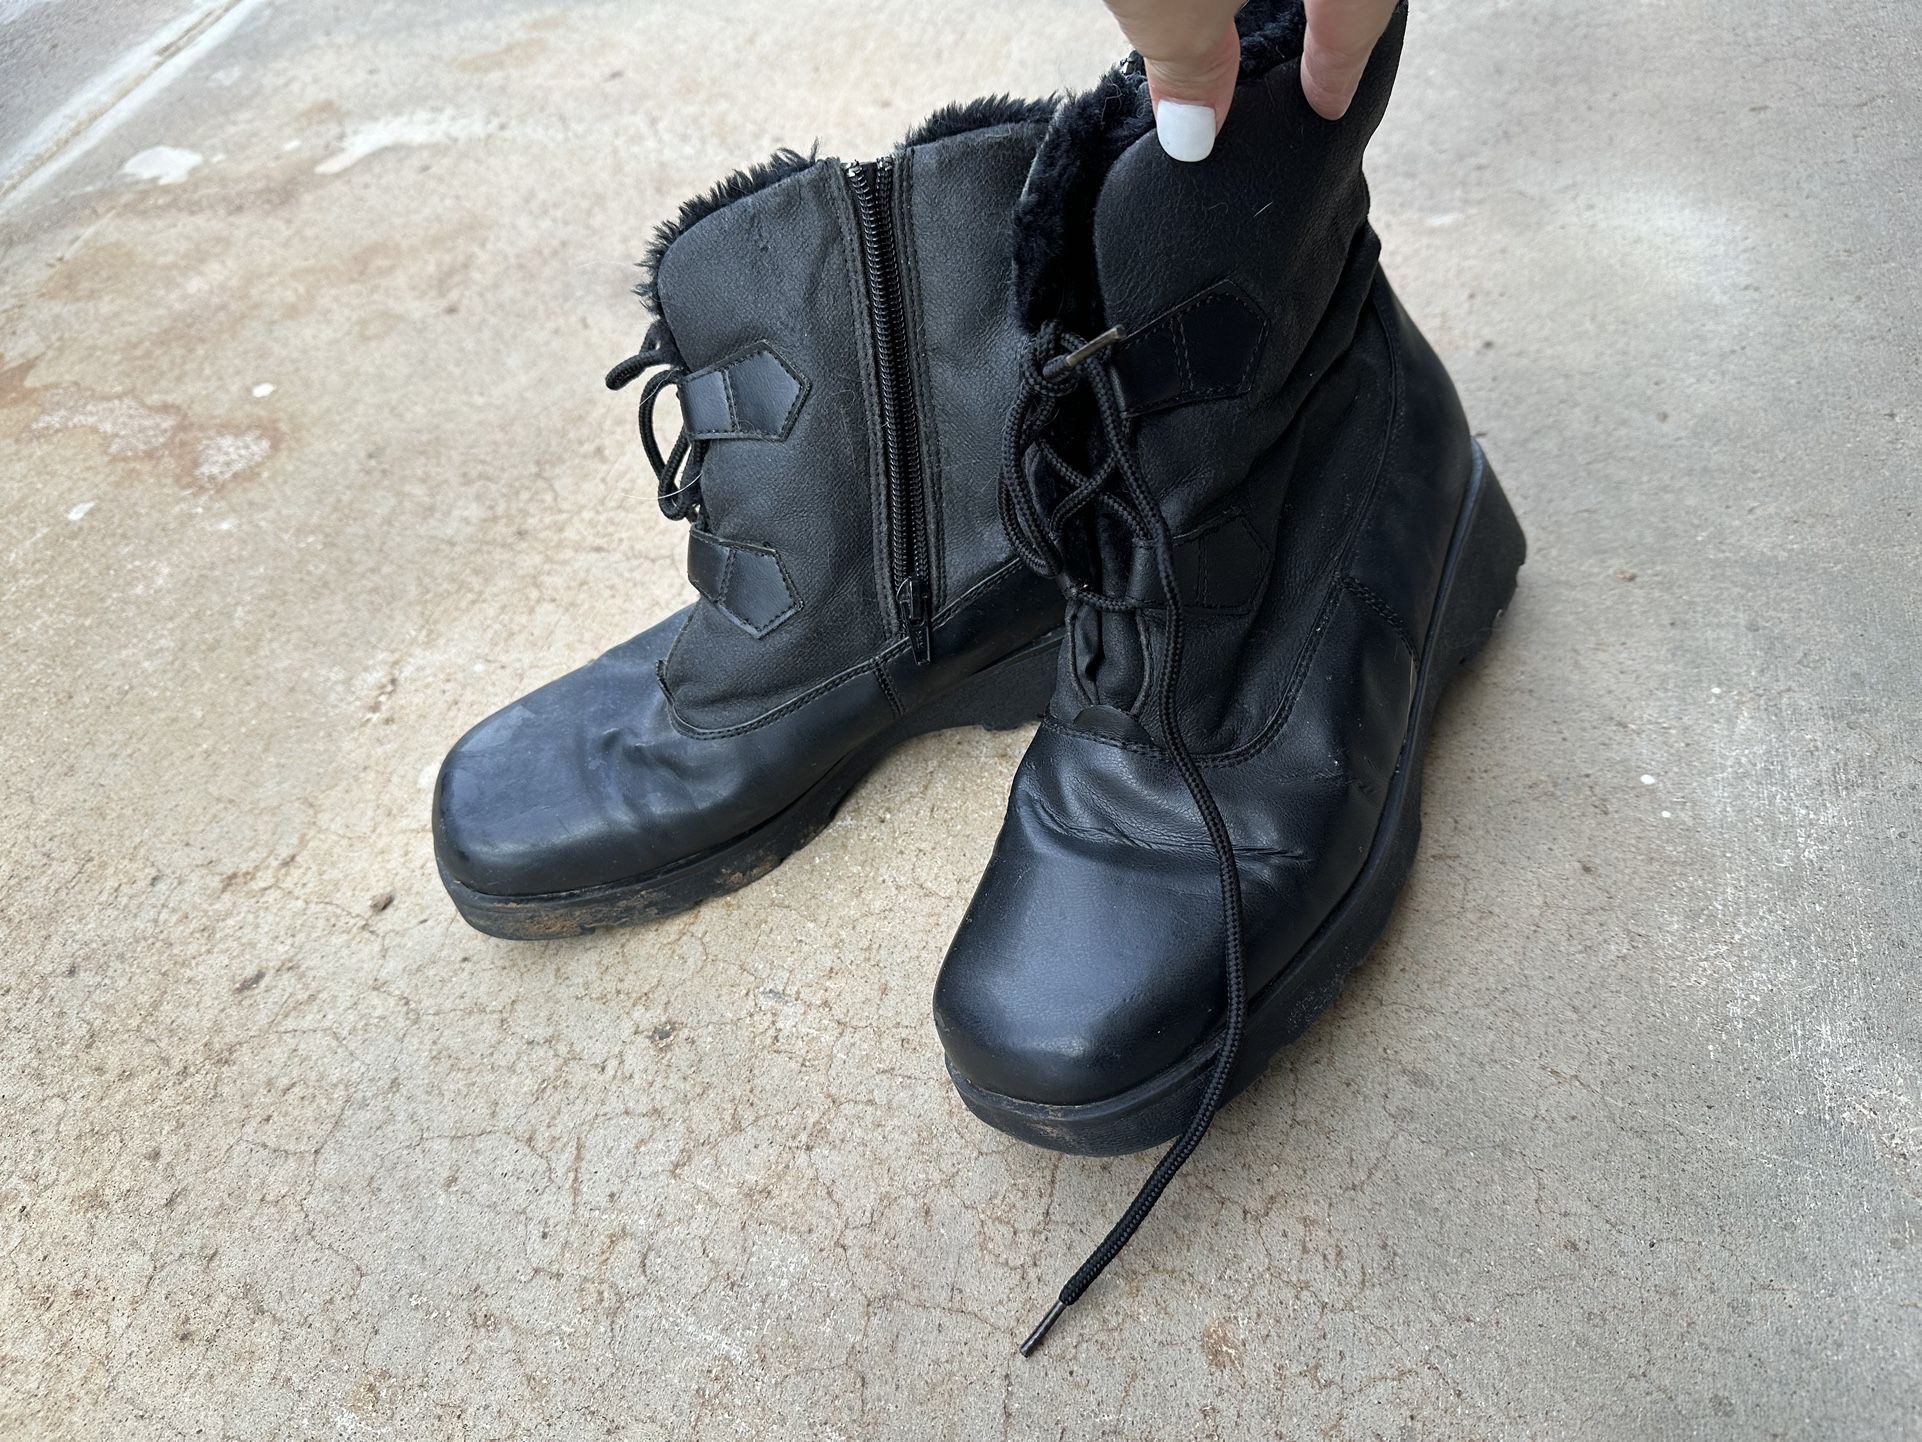 Size 9 Women’s Snow Boots